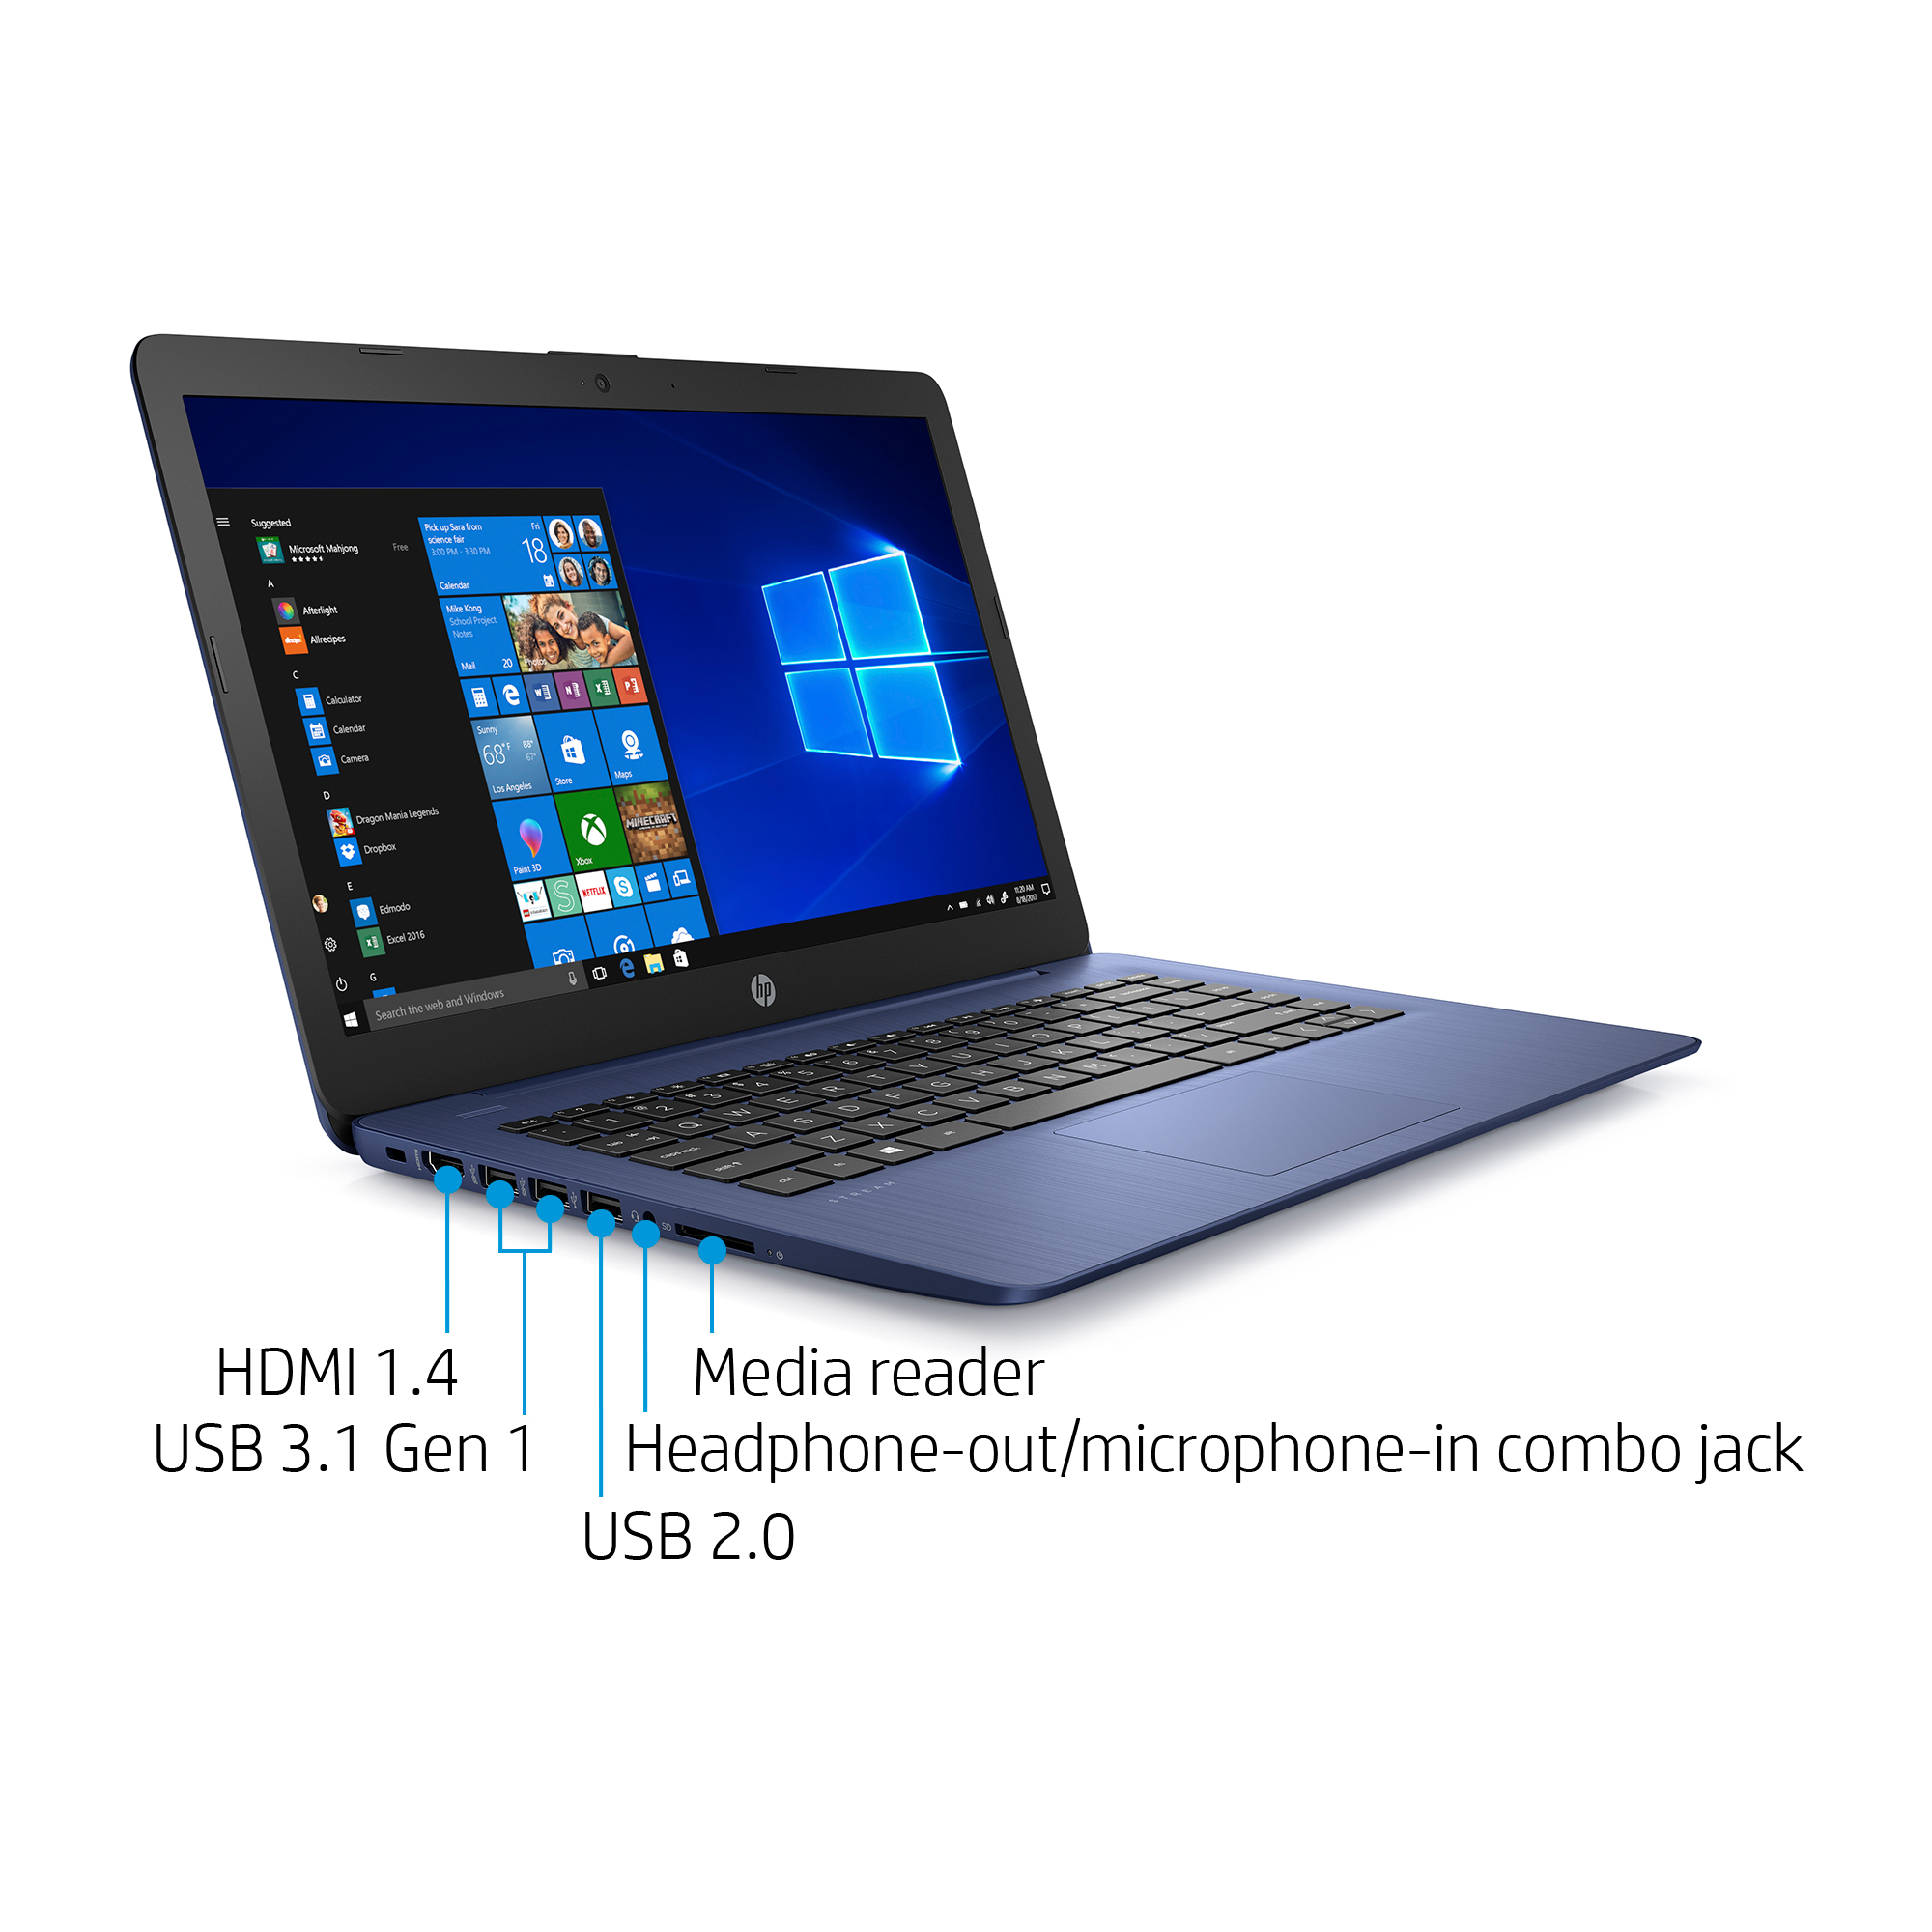 HP 14" PC Laptop, Intel Celeron N4000, 4GB RAM, 64GB HD, Windows 10S with 1 year Office 365, Blue, 14-cb171wm - image 5 of 12